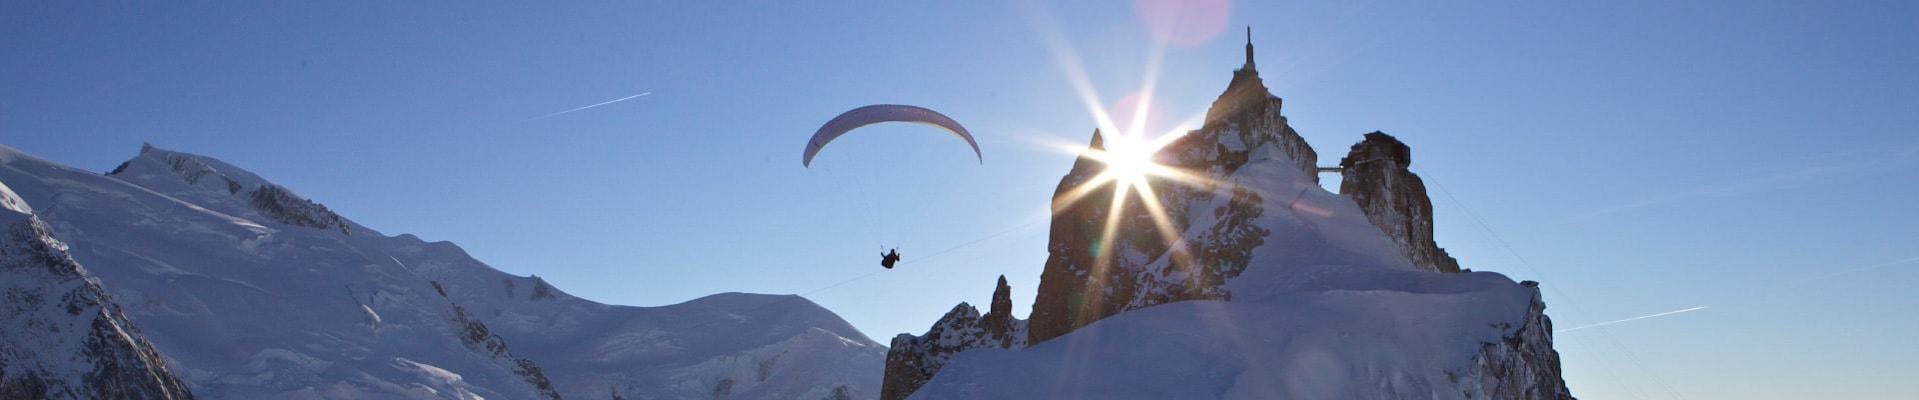 Parapente biplaza a gran altitud en Chamonix (a partir de 16 años) - Aiguille du Midi.